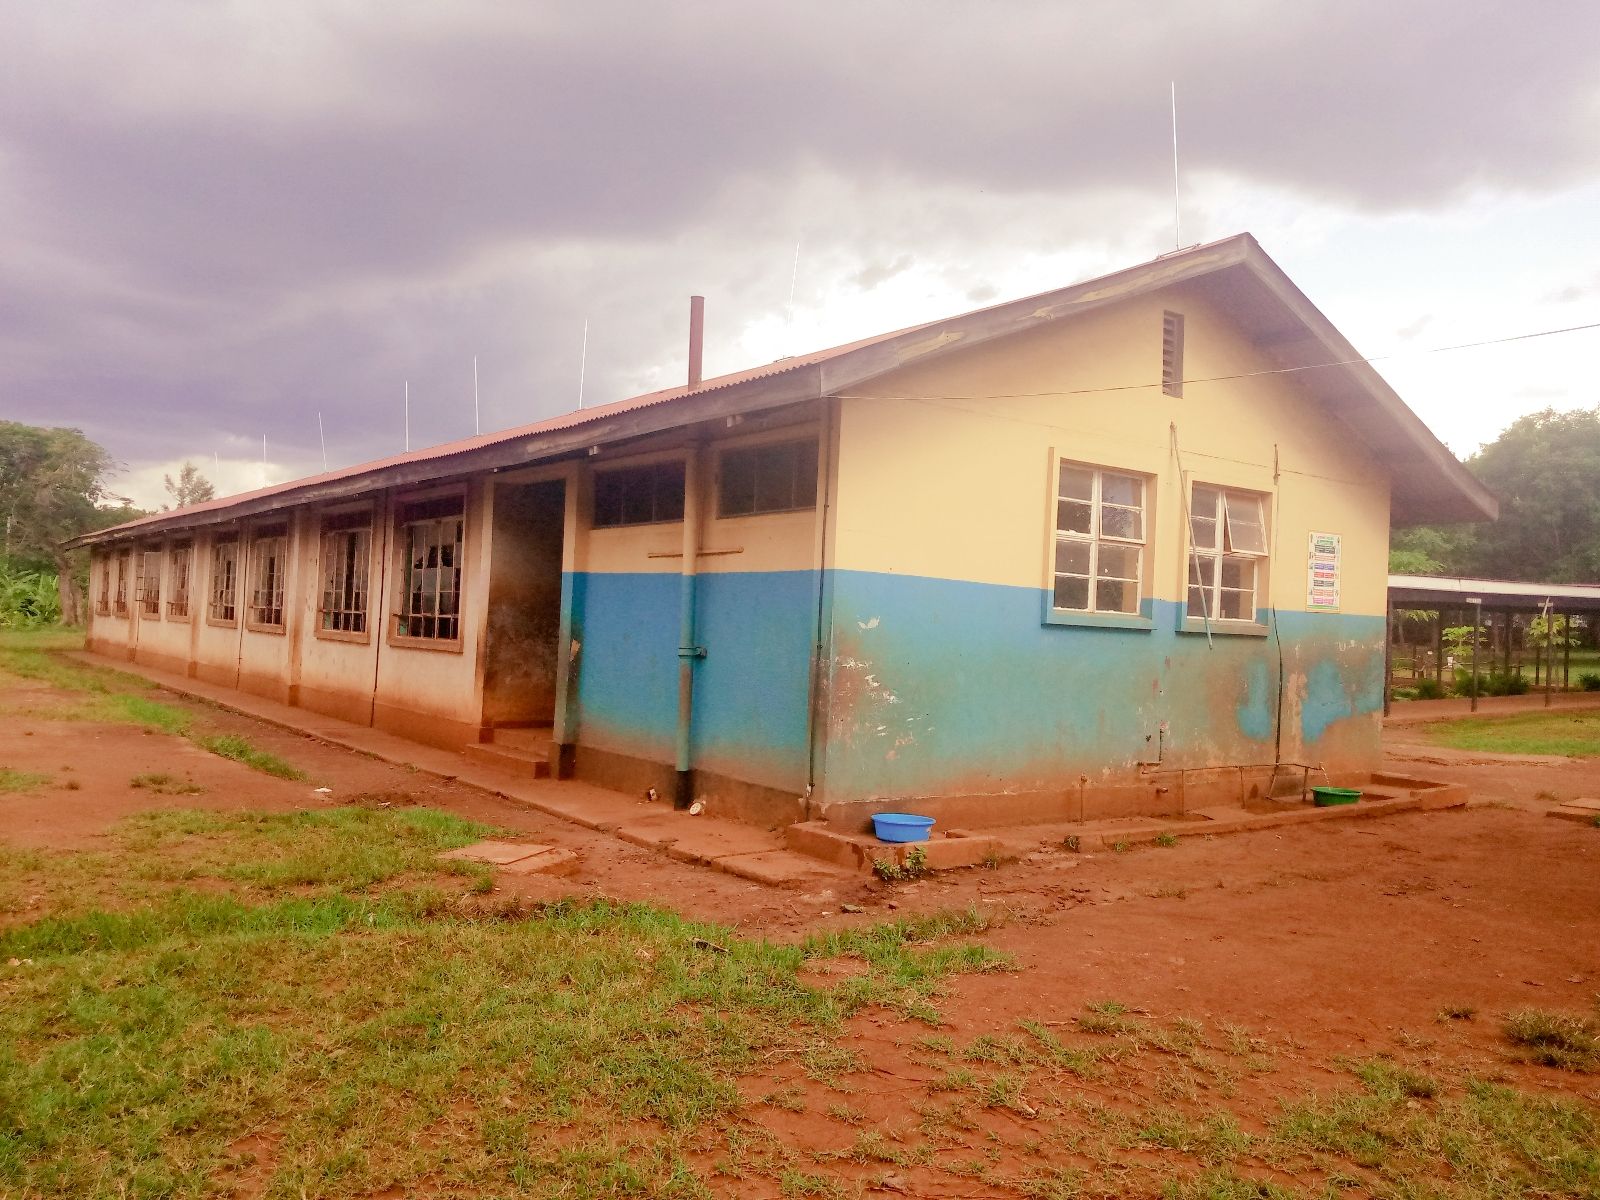 Rock View Primary School, Tororo District, Southeast Uganda, 2019-20